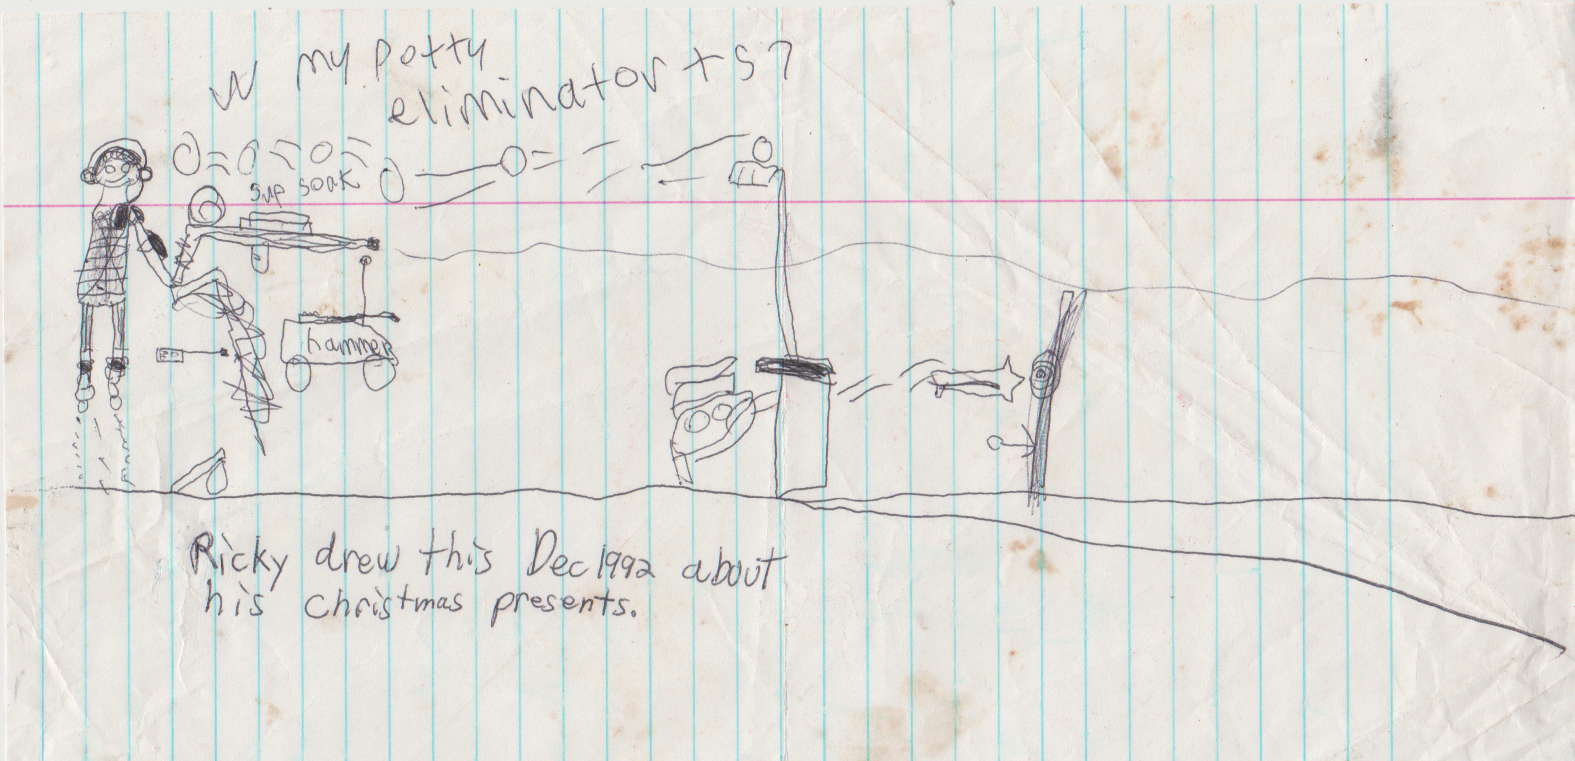 1992-12 - Rick drew this regarding his Christmas gift.png